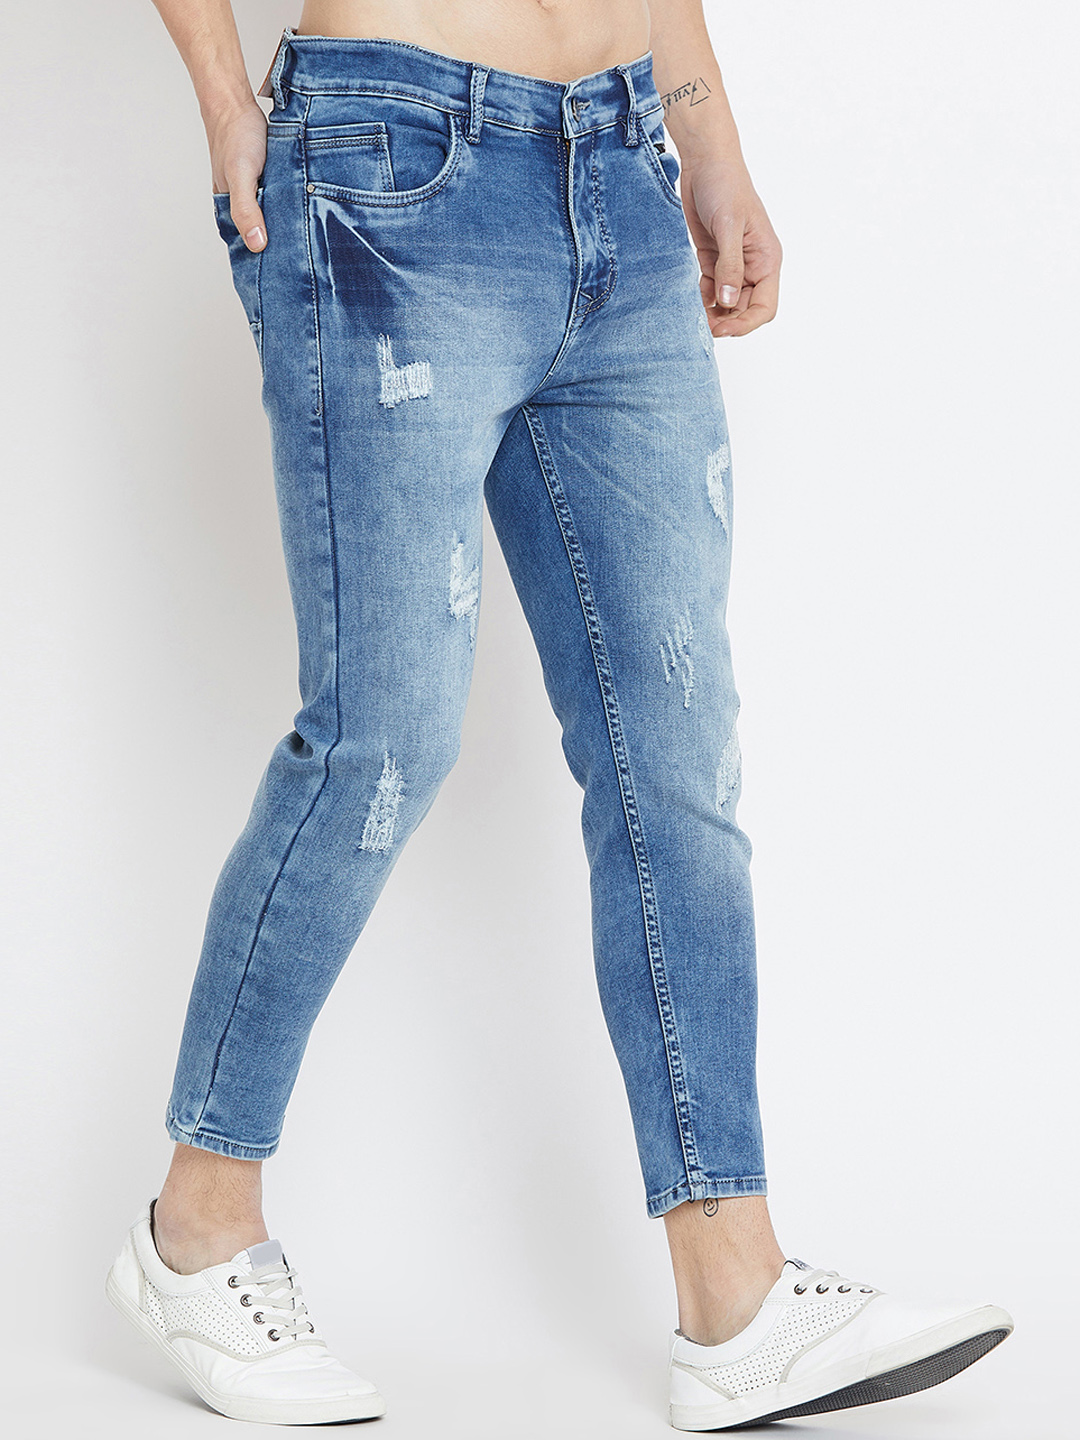 Buy Stylox Men Slim Fit Mid Rise Light Blue Damage Jeans Online @ ₹1199 ...